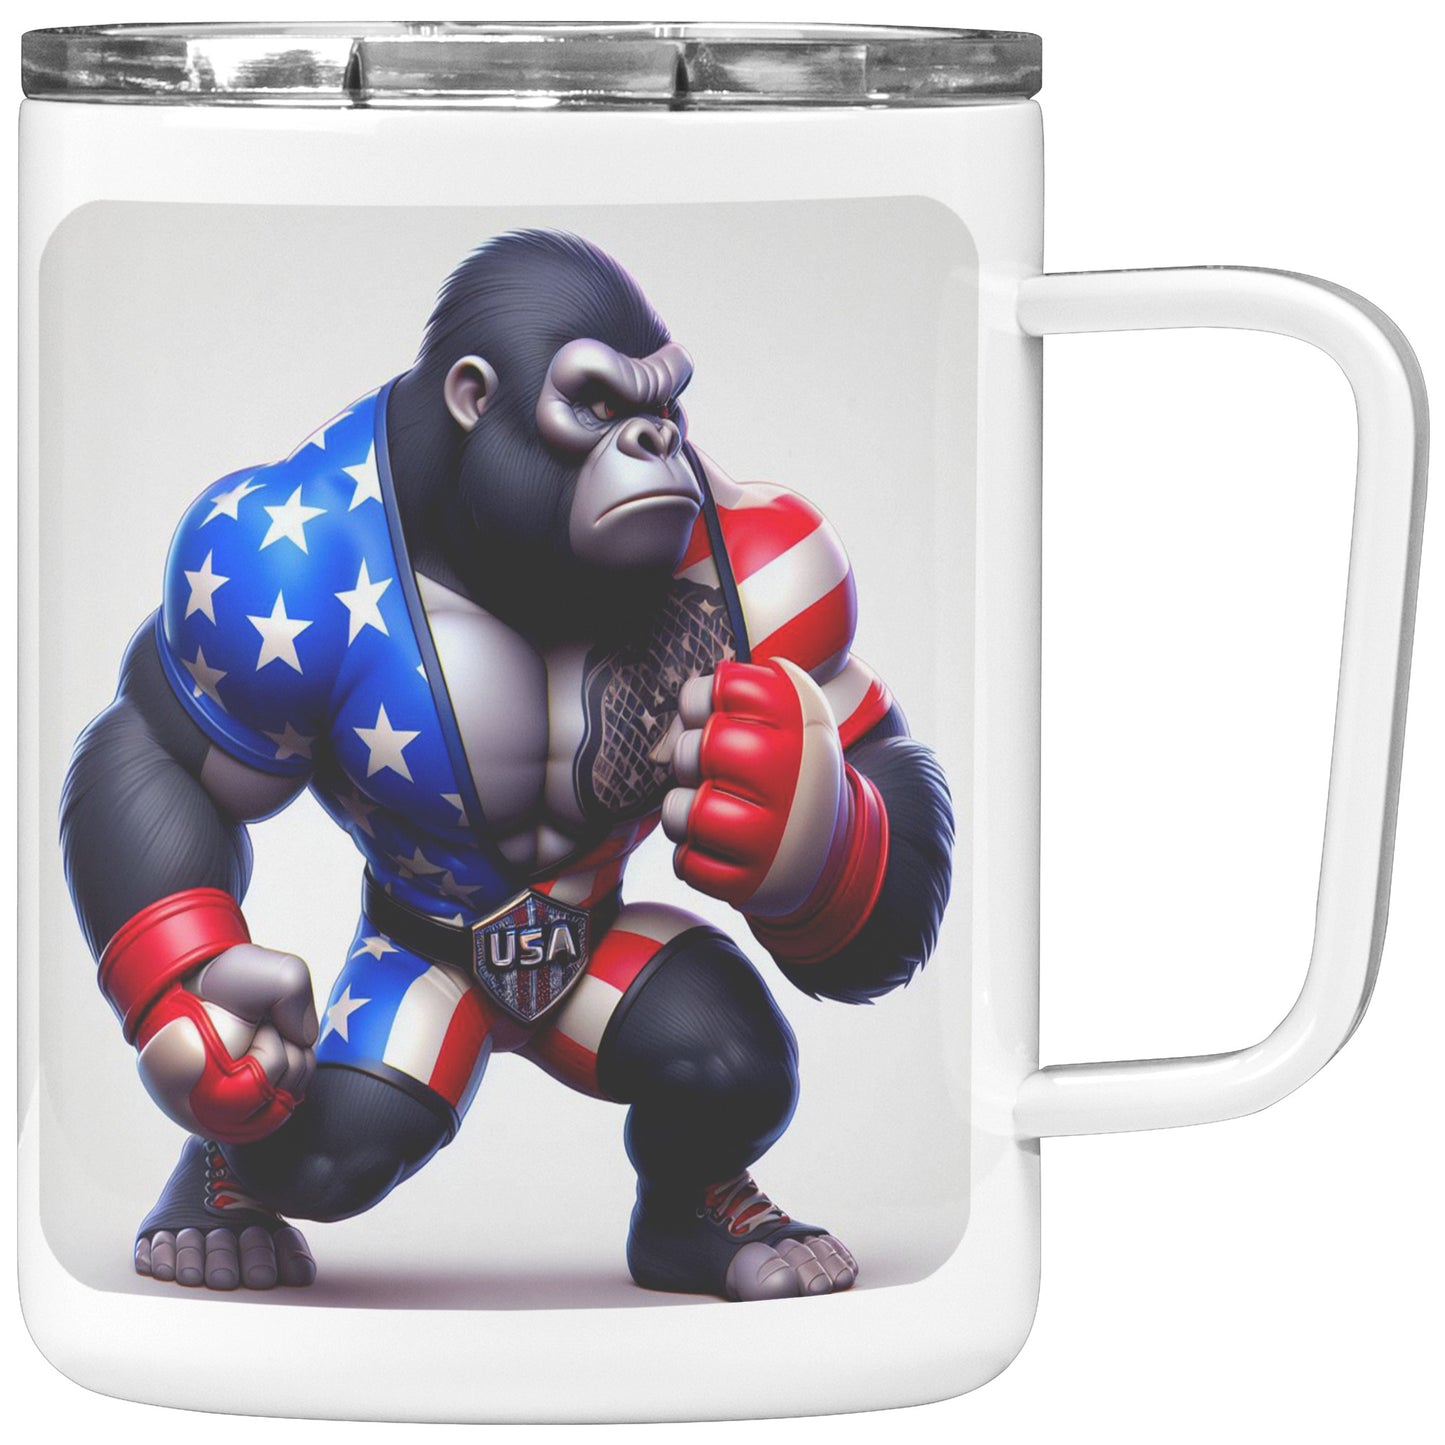 Grumpy Gorilla - Insulated Coffee Mug #29